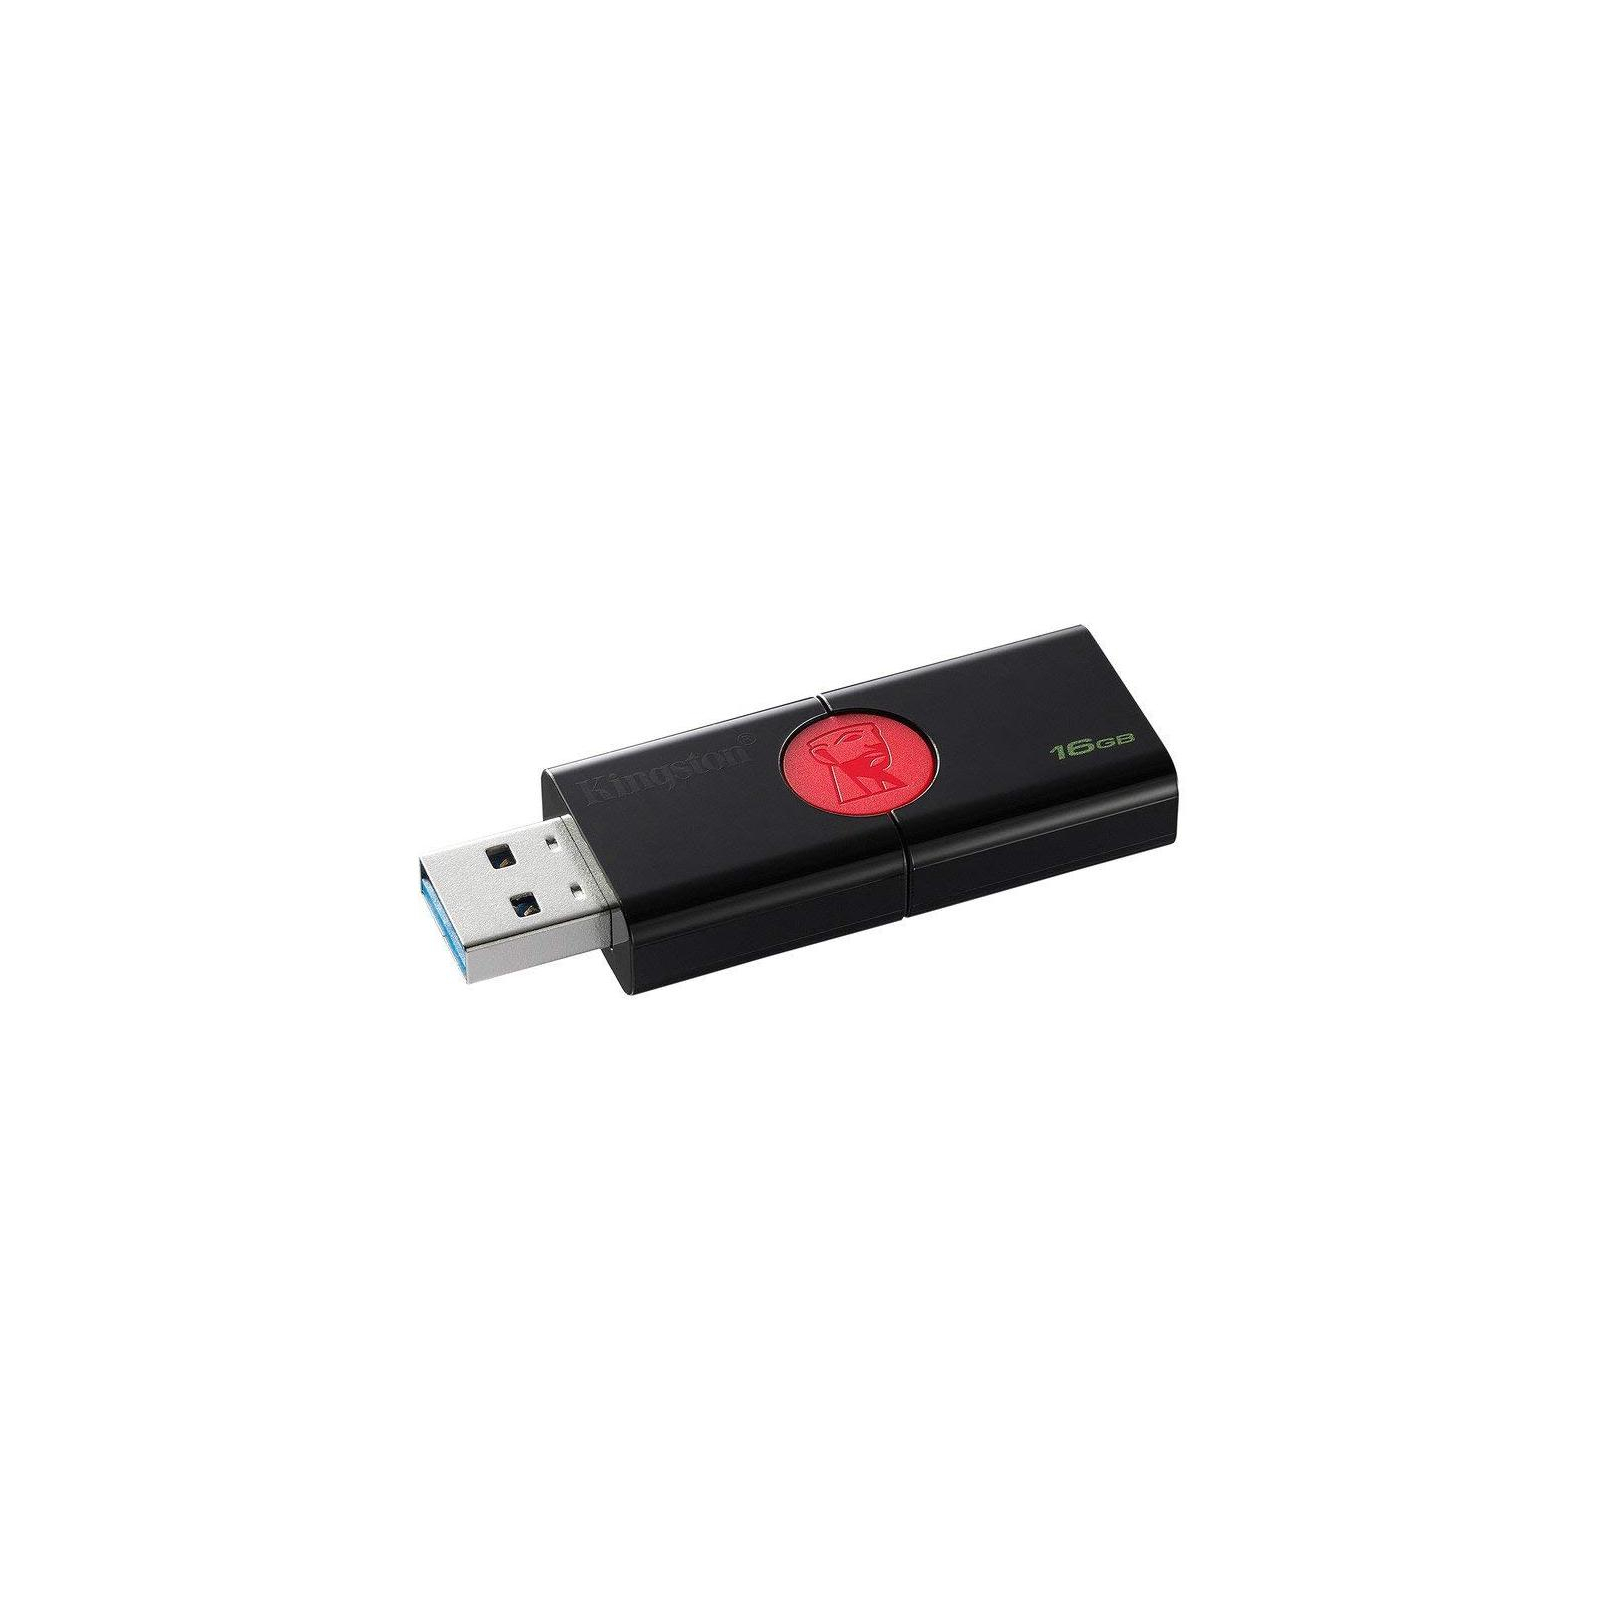 USB флеш накопитель Kingston 16GB DT106 USB 3.0 (DT106/16GB) изображение 4